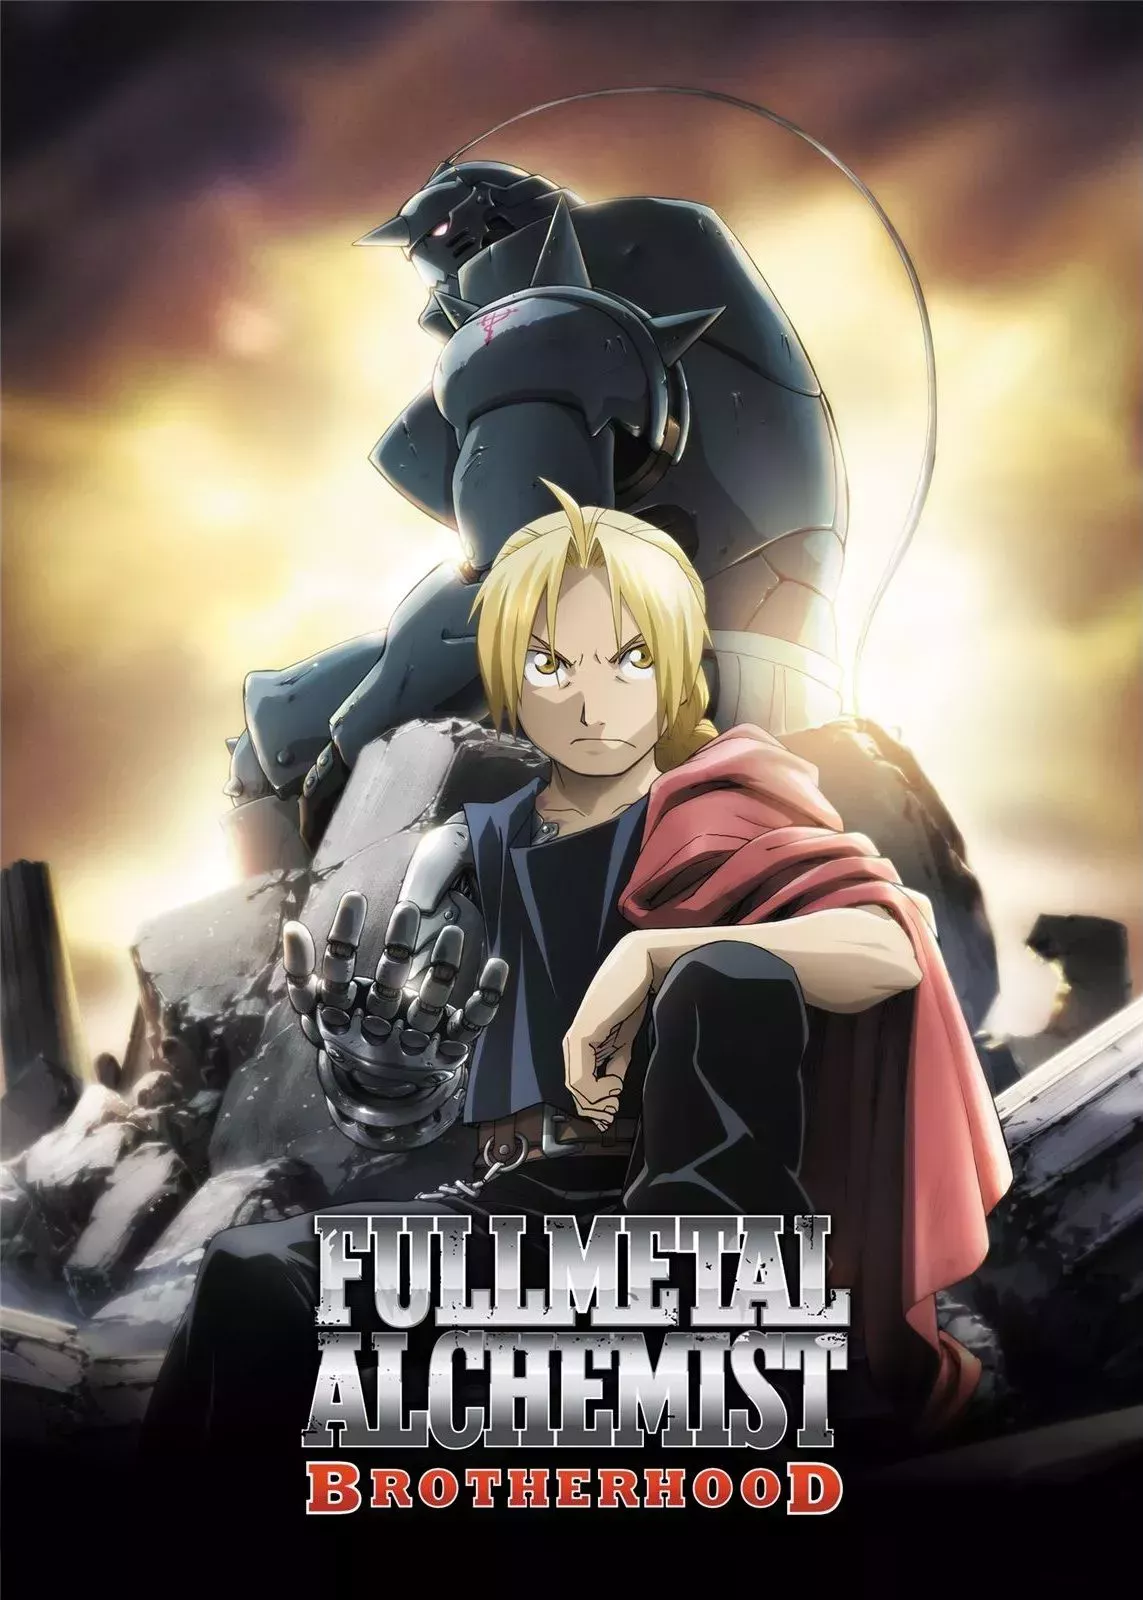 Edward and Alphonse Elric in Fullmetal Alchemist Brotherhood Anime Poster